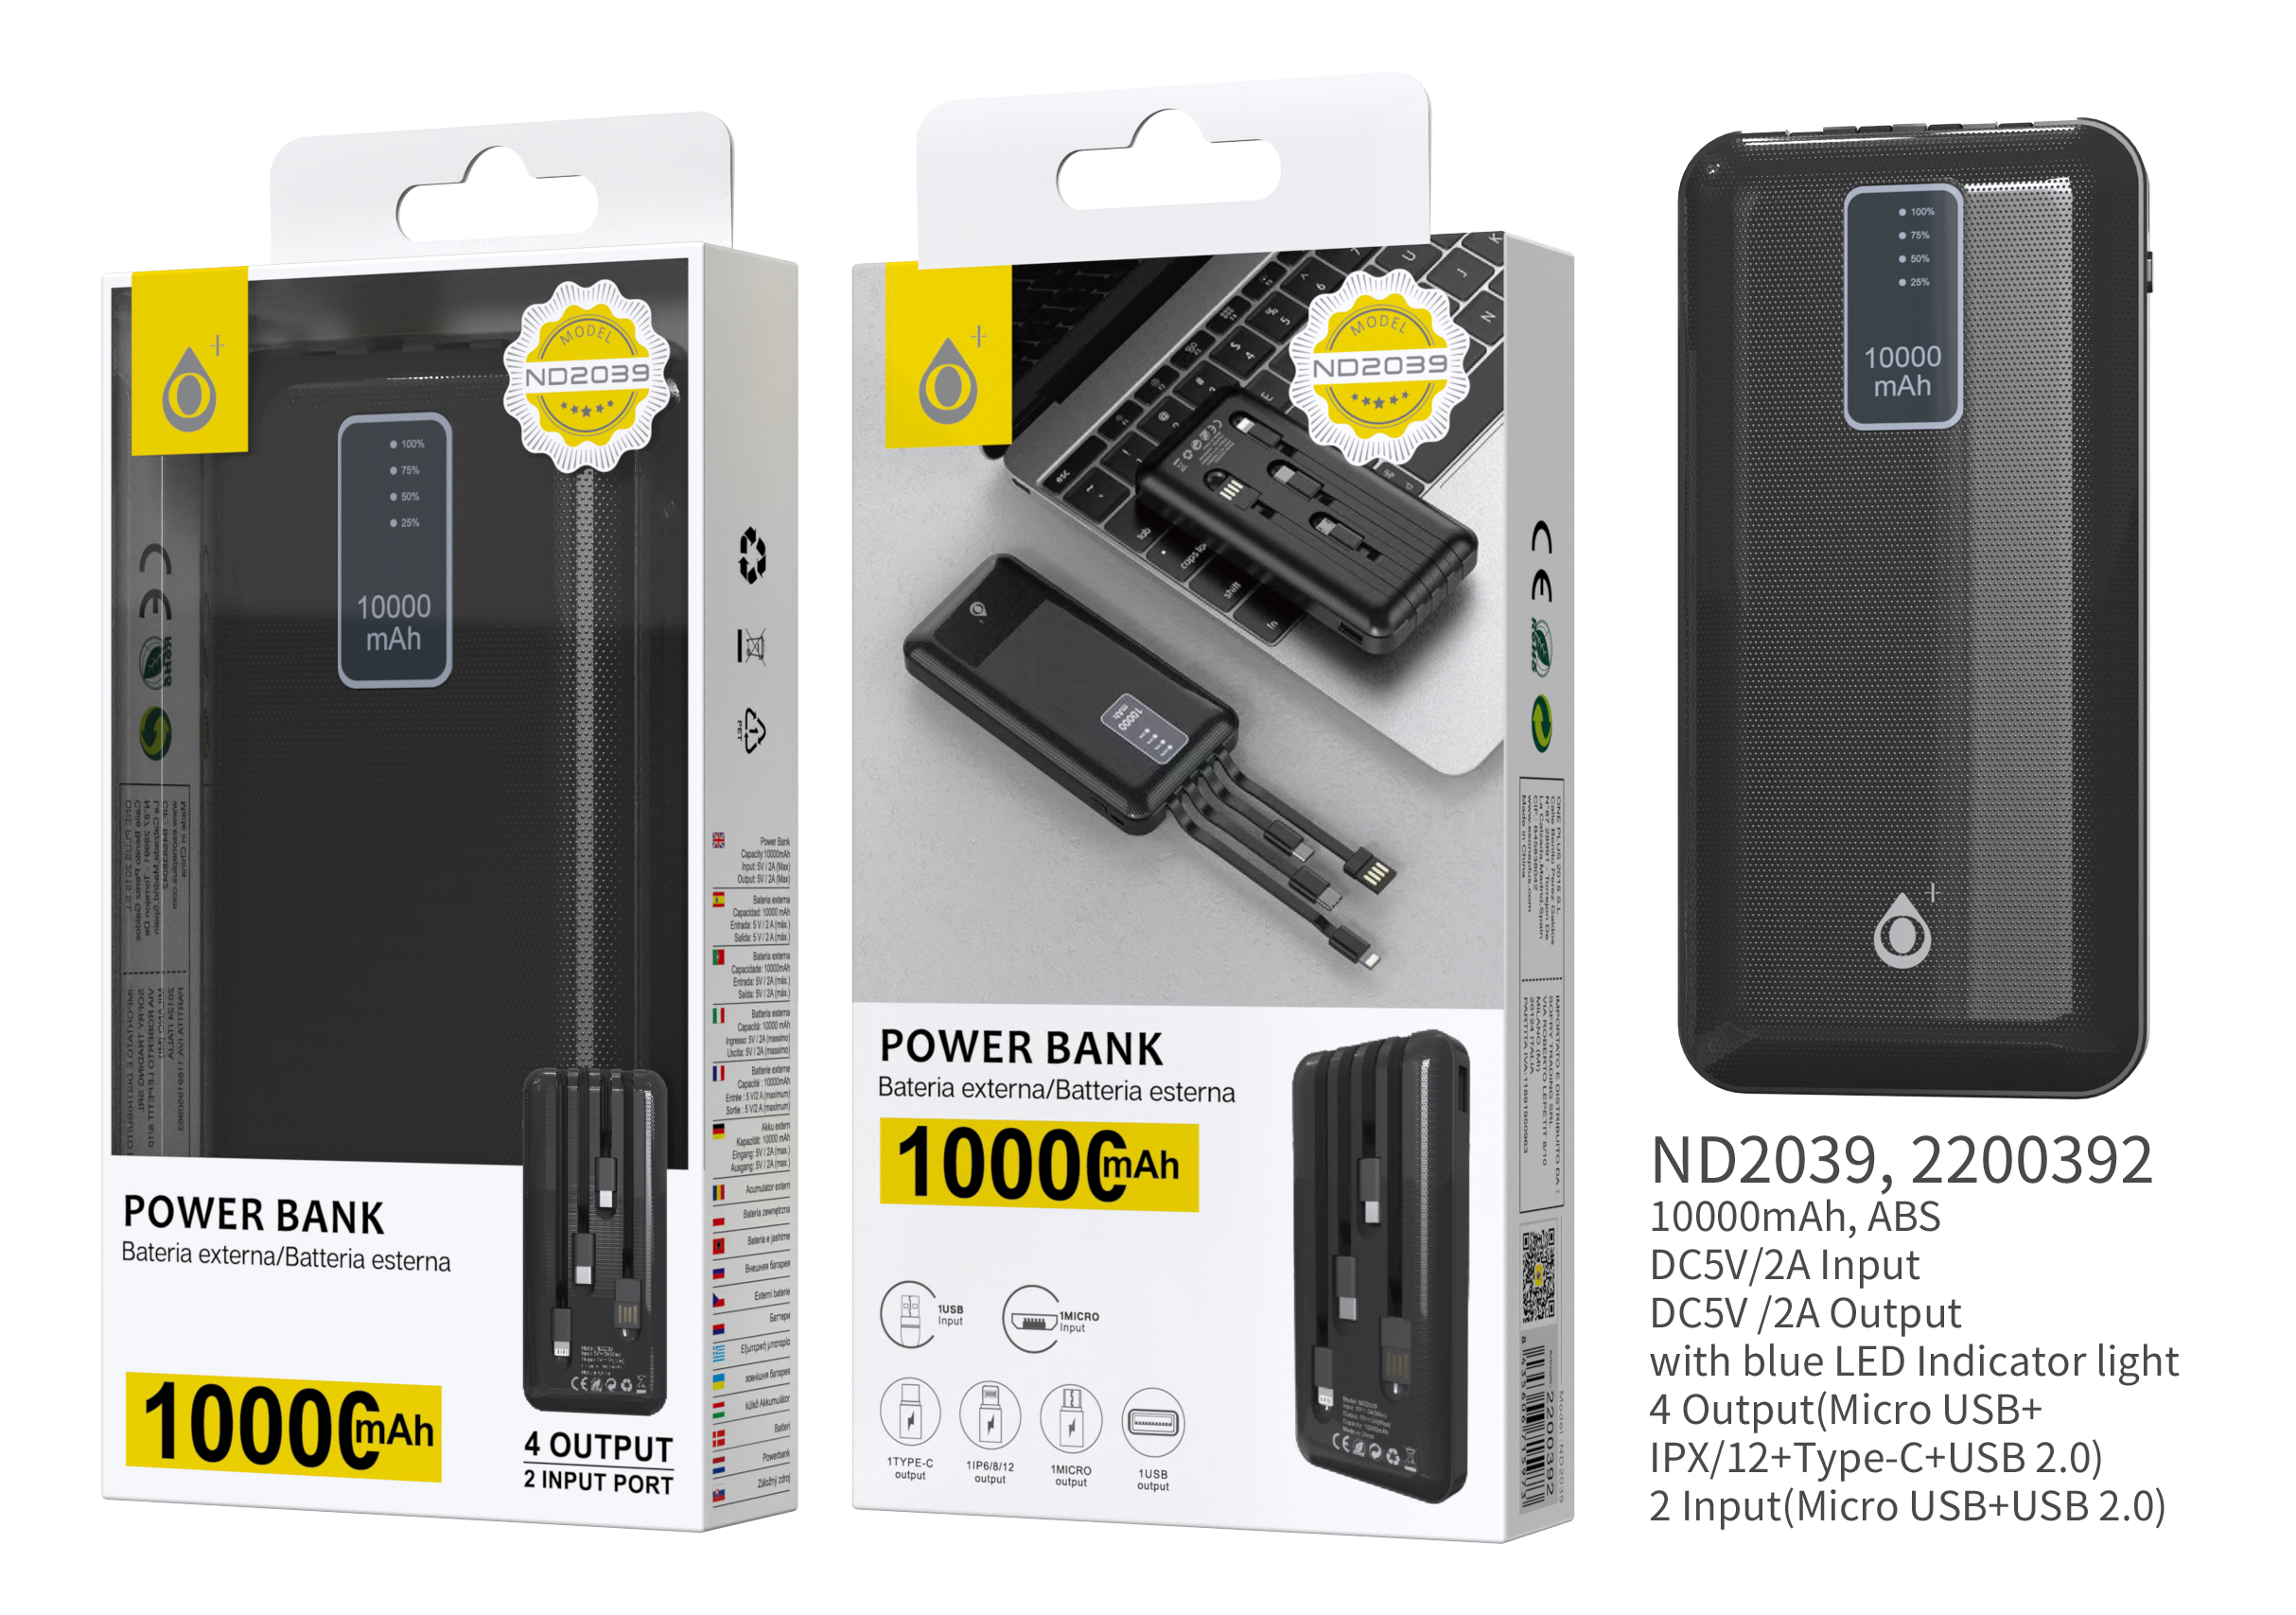 ND2039 NE Powerbank 10000mAh, 2 Entrada( Micro USB+USB), 4 salida (MicroUSB+ IP+ Type-C+ USB), con Indicador de LED Azul 5V, 2A,  Negro